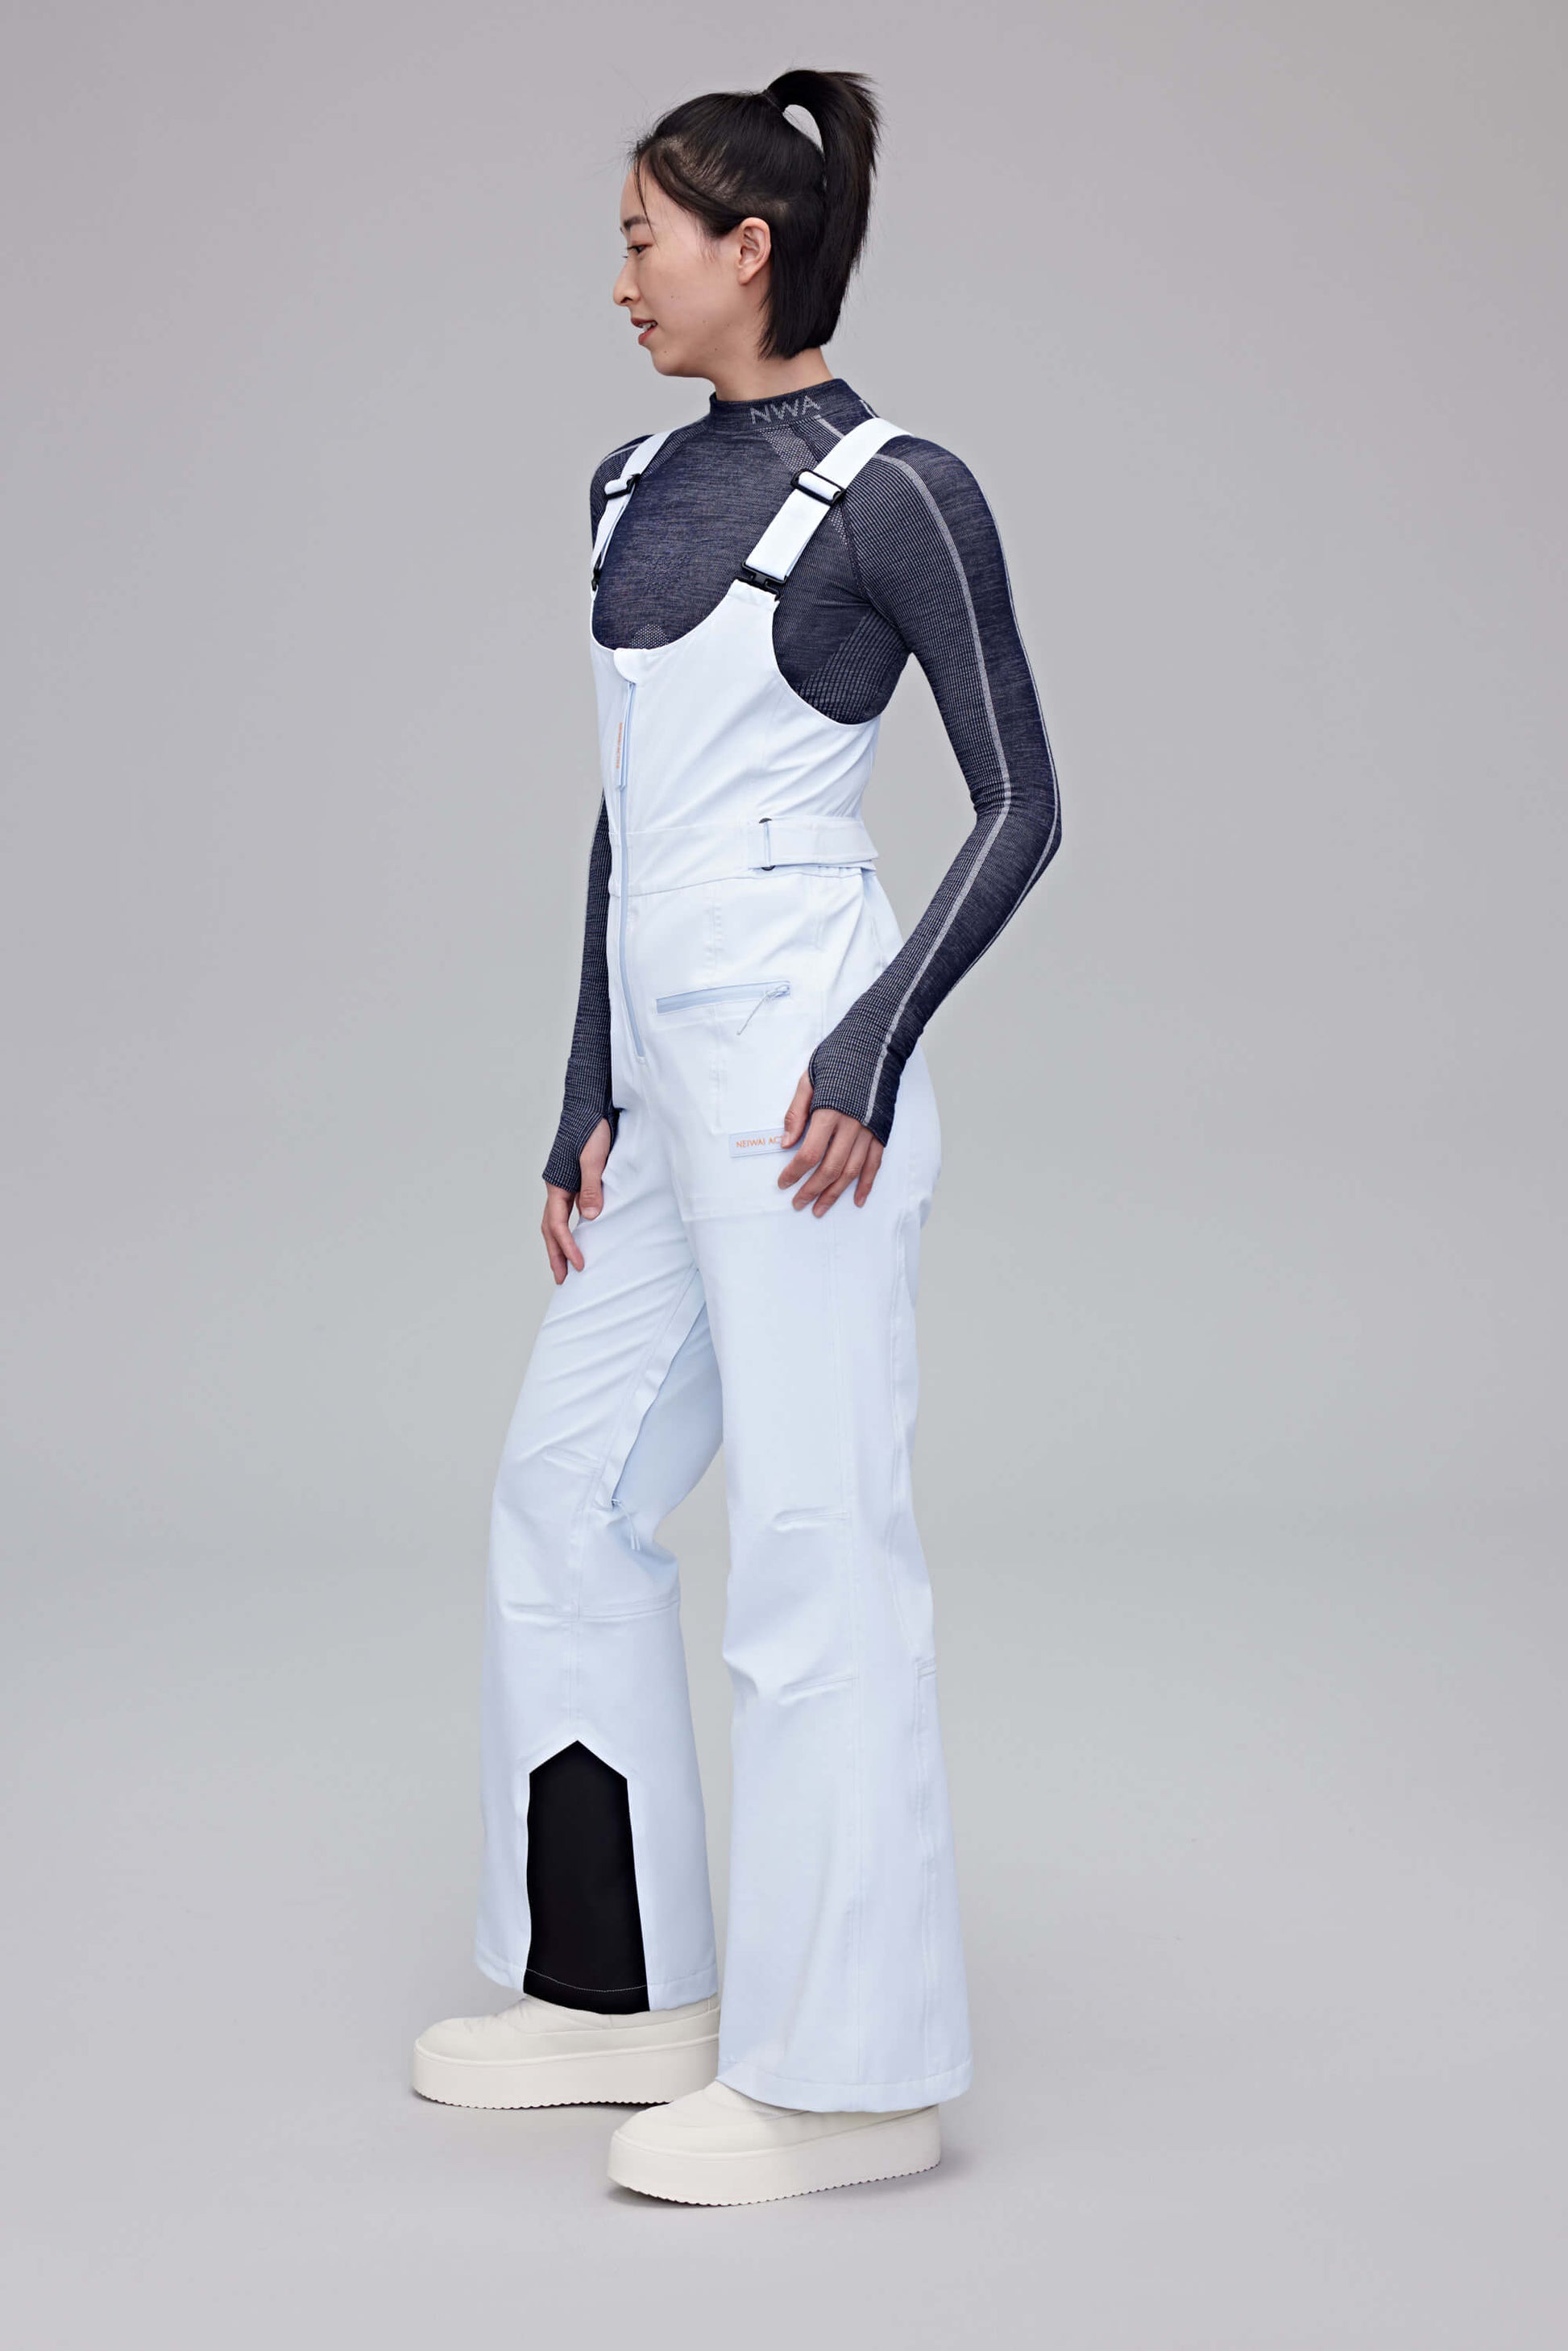 Women's Slim Snowsport Pants - All In Motion™ Black XS